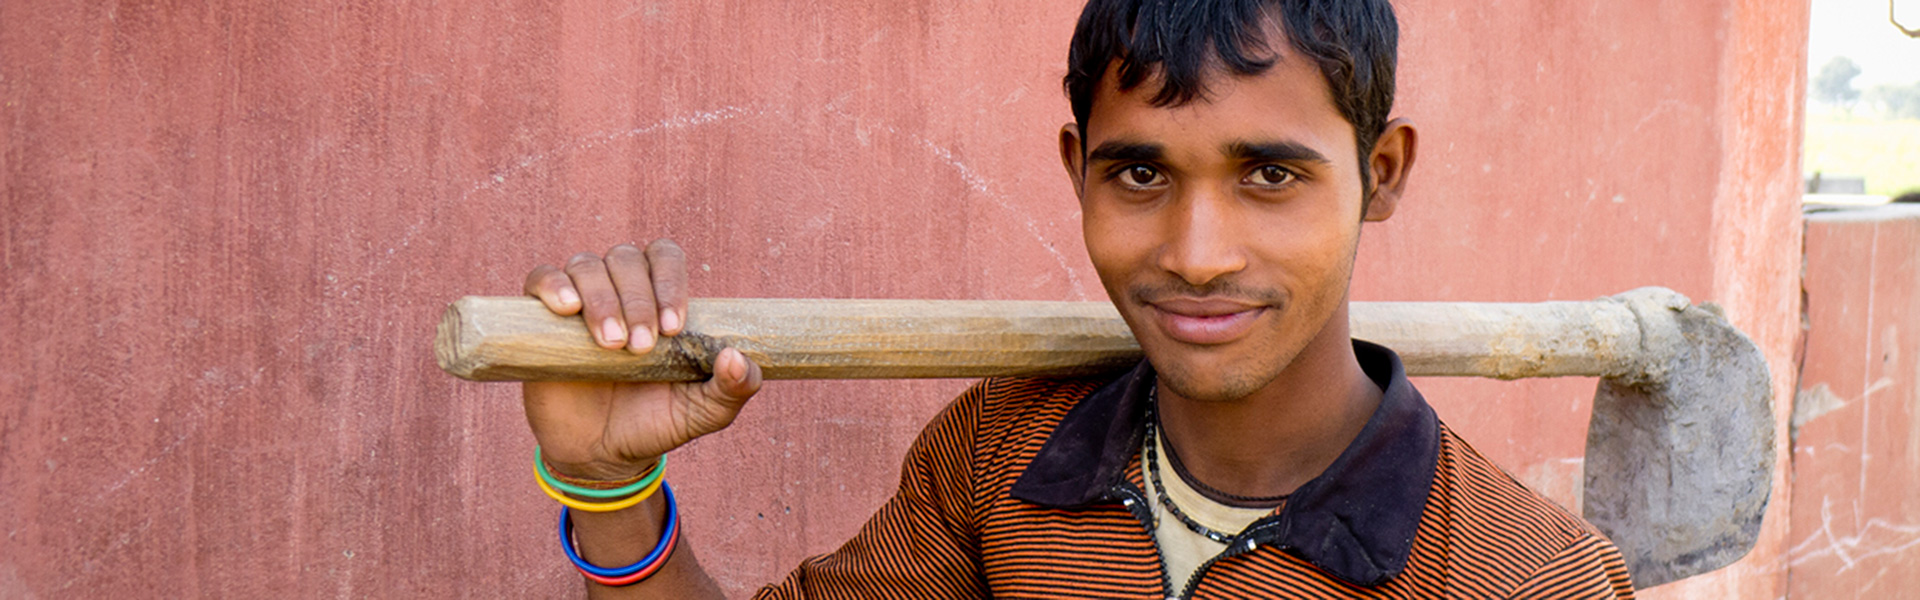 nepal-samvad-adolescent-boy-farmer